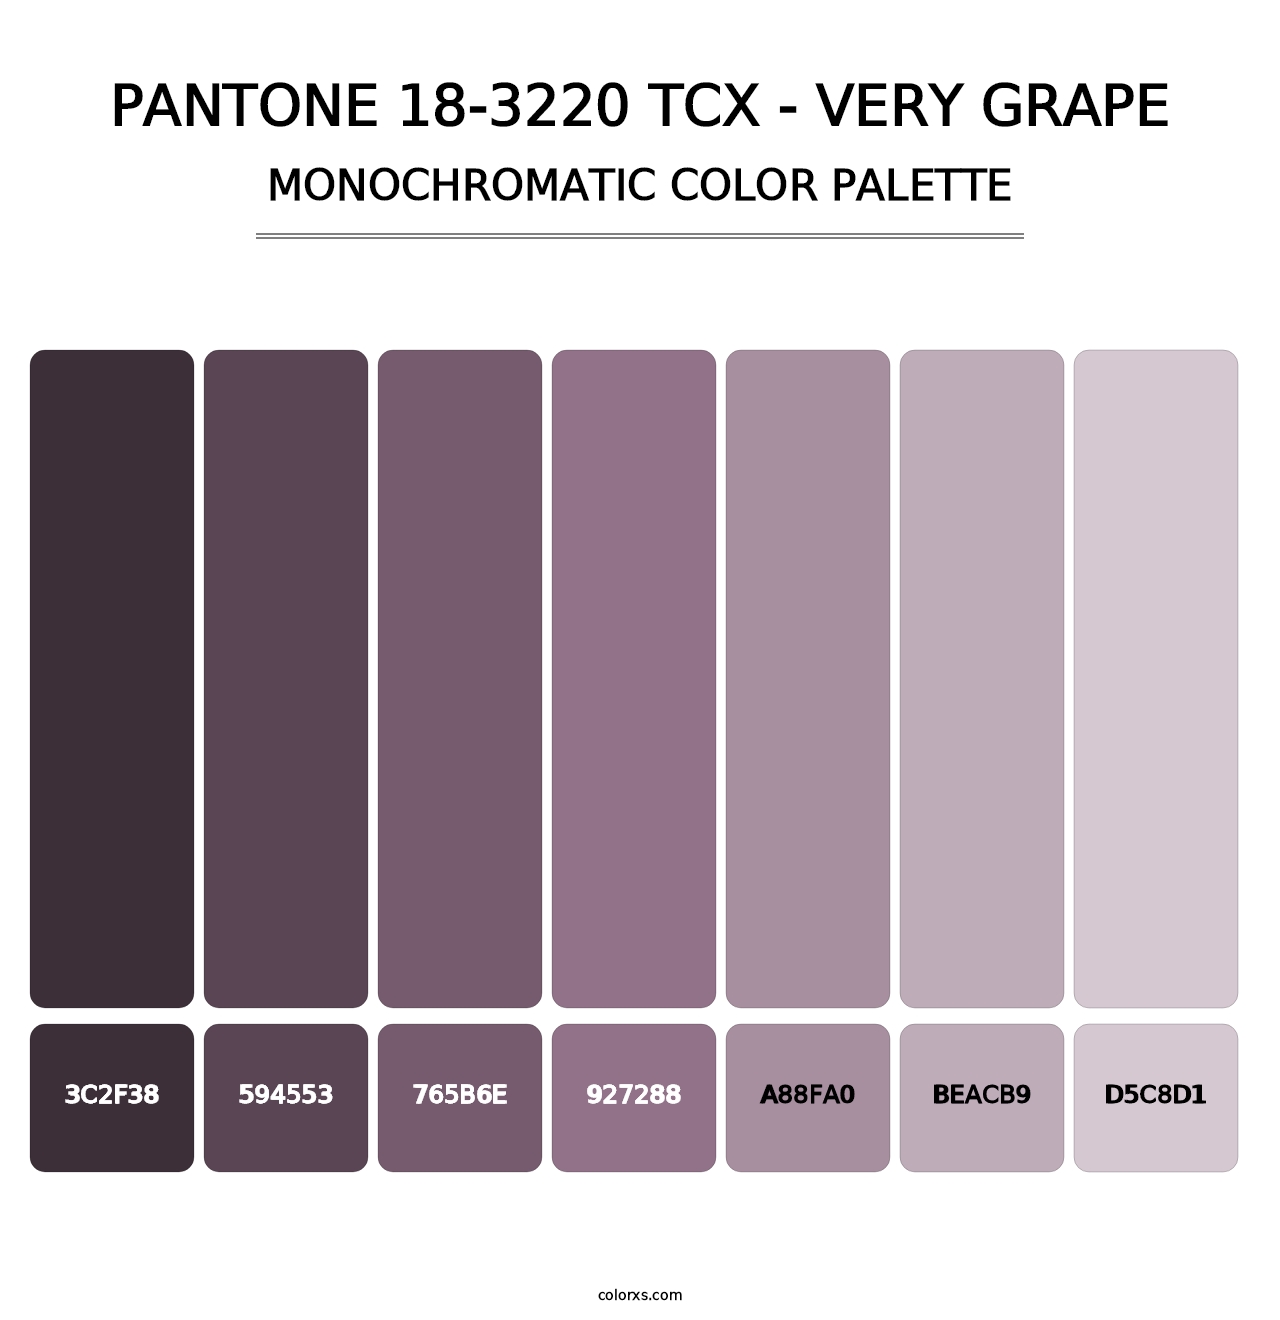 PANTONE 18-3220 TCX - Very Grape - Monochromatic Color Palette